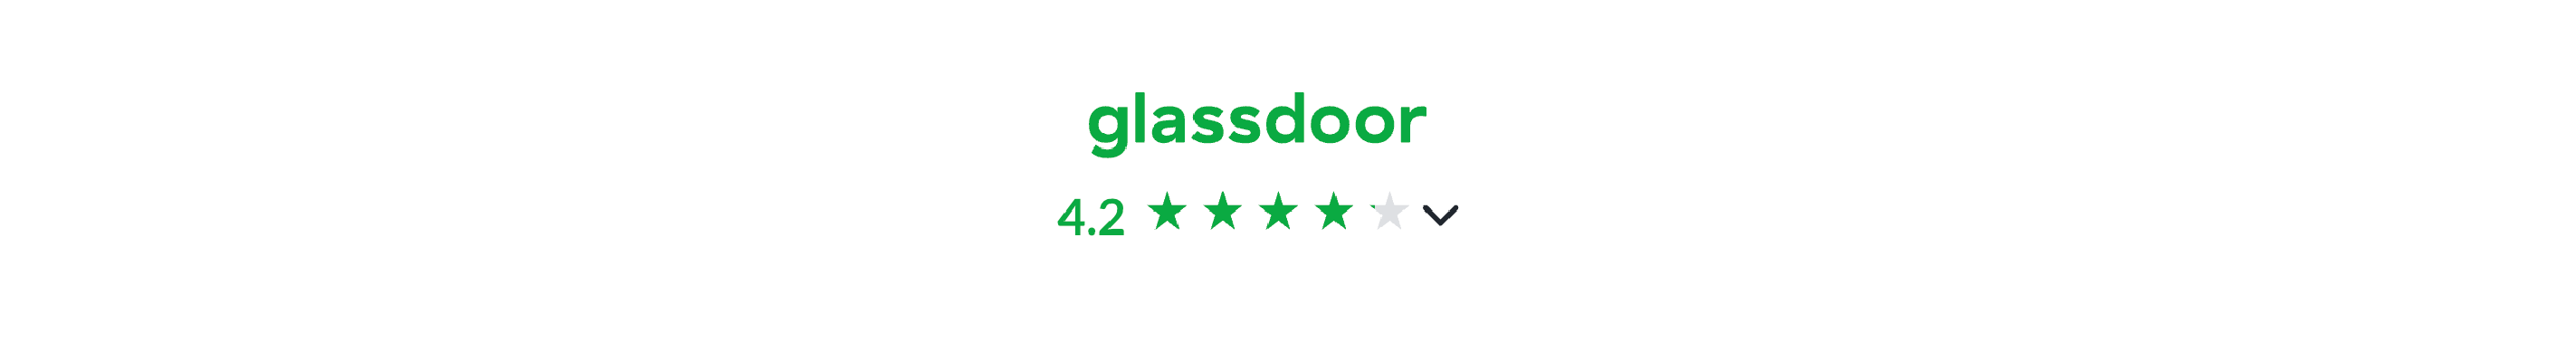 Levin Furniture Glassdoor reviews.